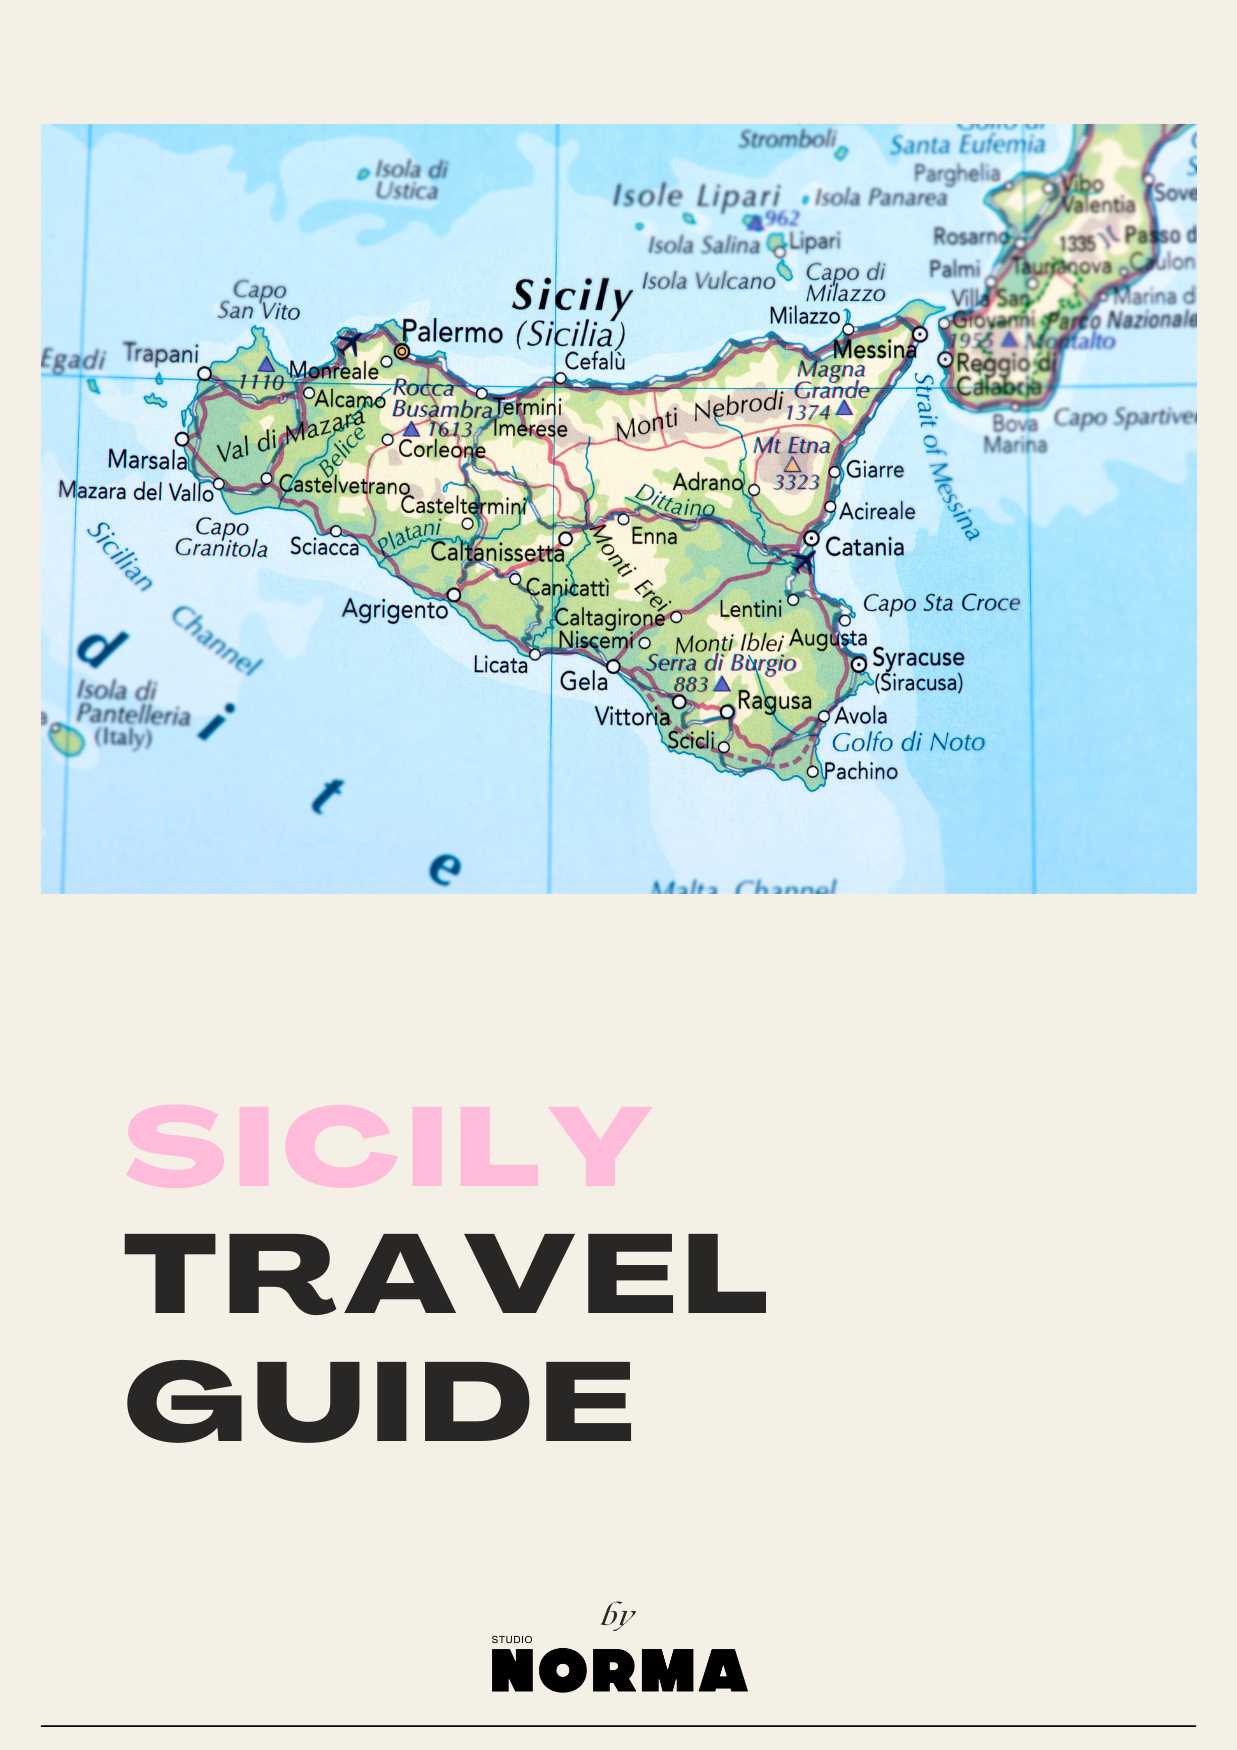 travel guide for sicily